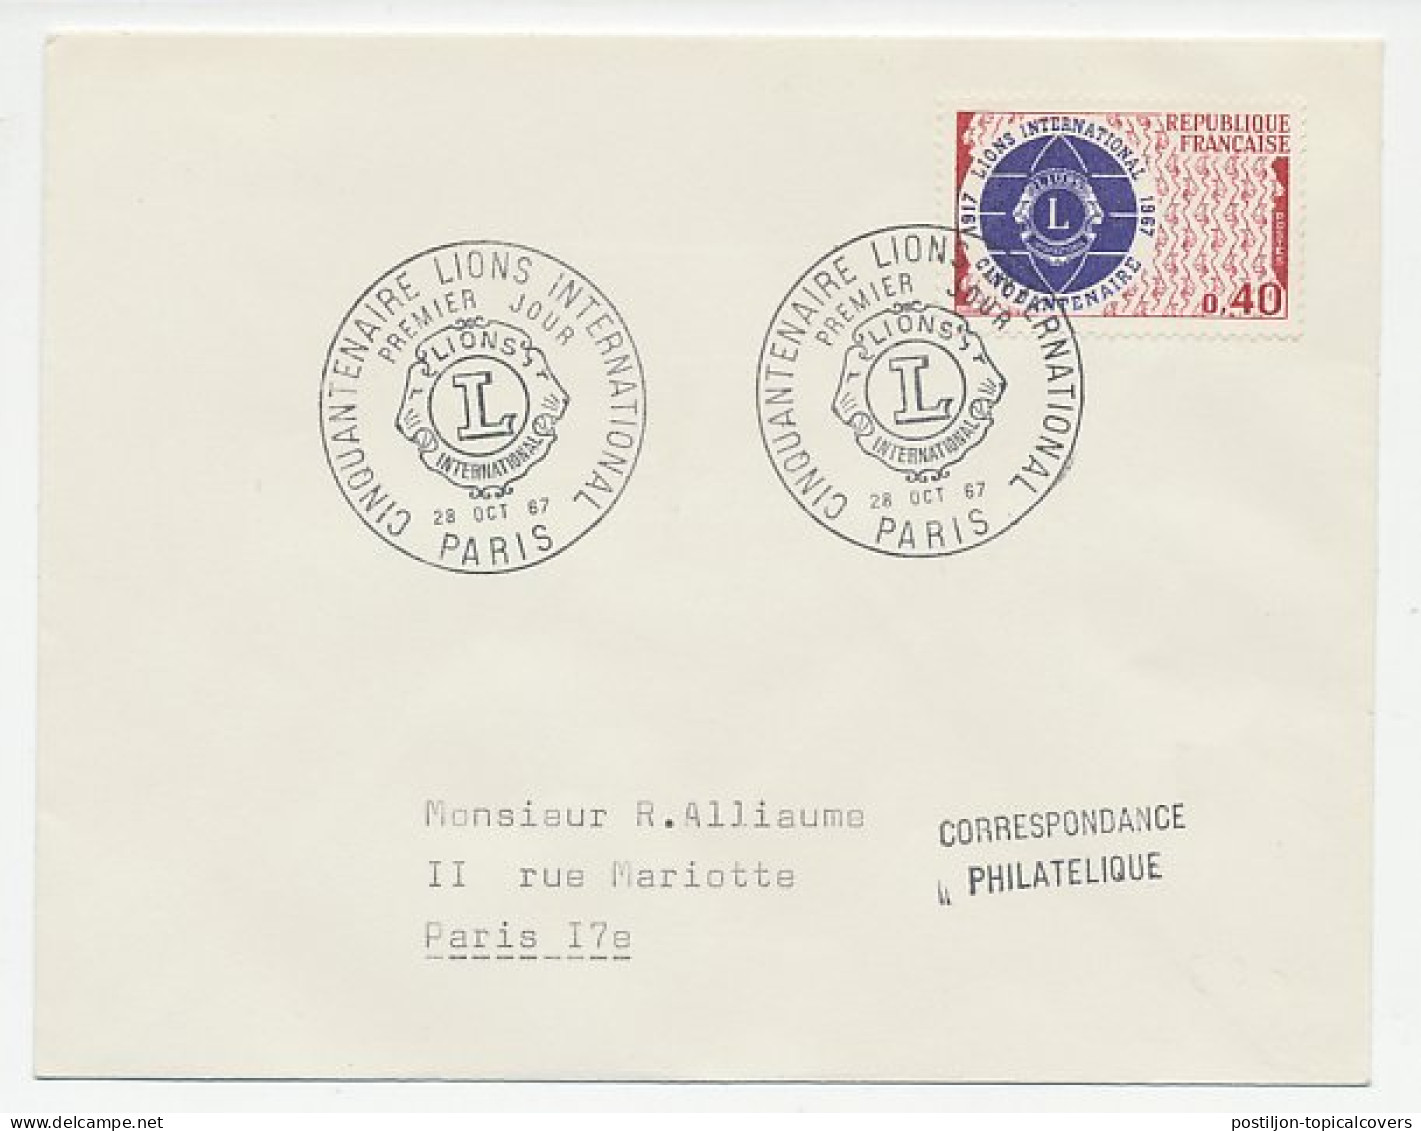 Cover / Postmark France 1967 Lions International - Rotary, Club Leones